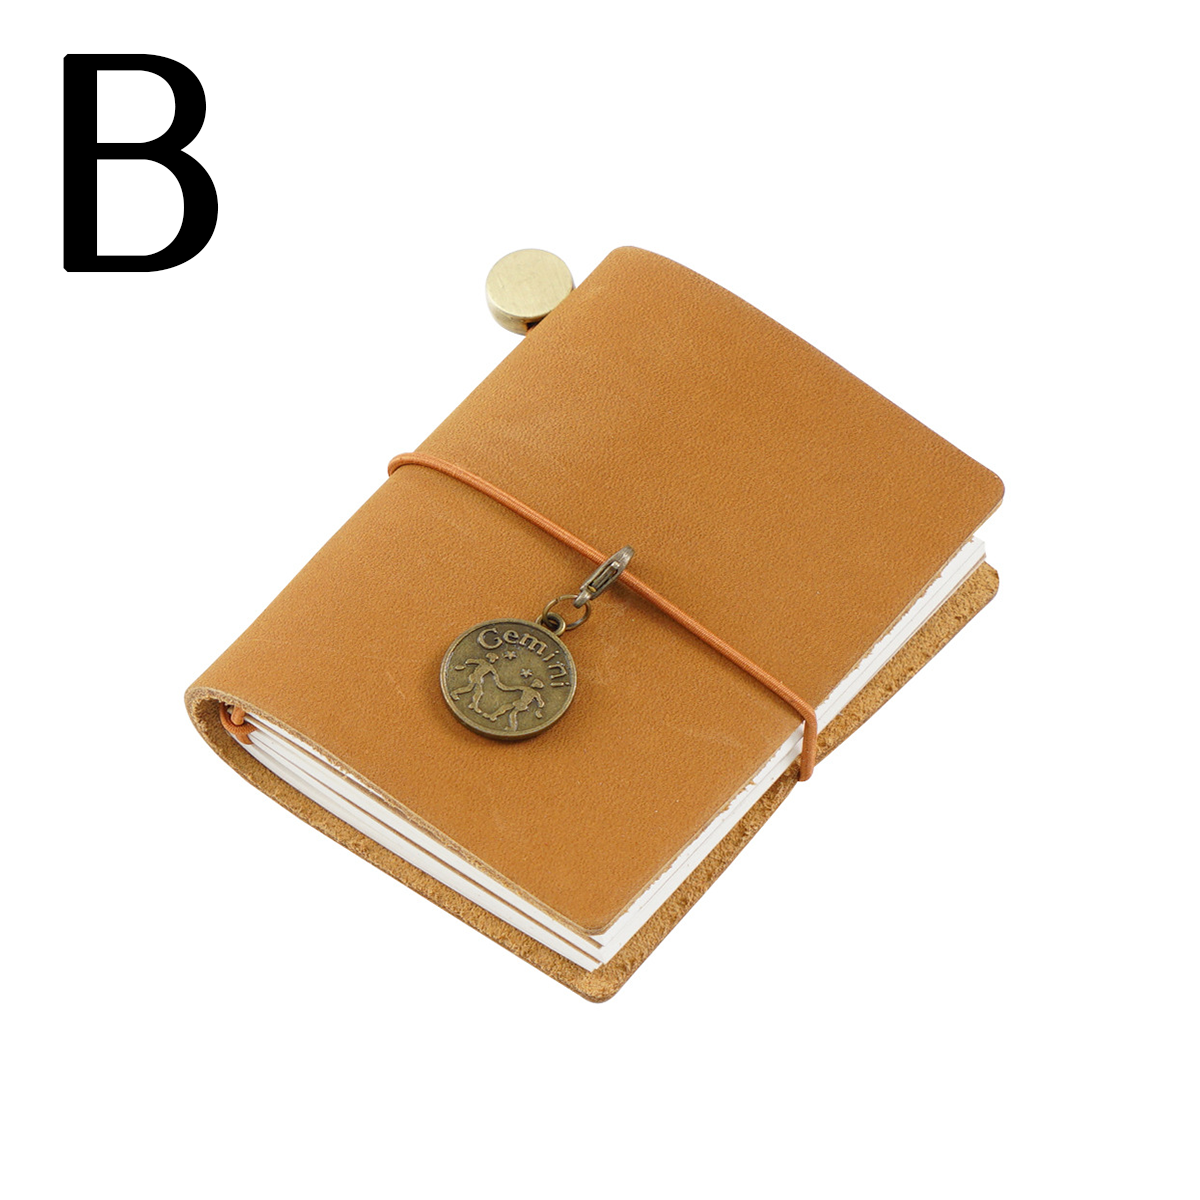 68mm*85mm Mini Leather Journal